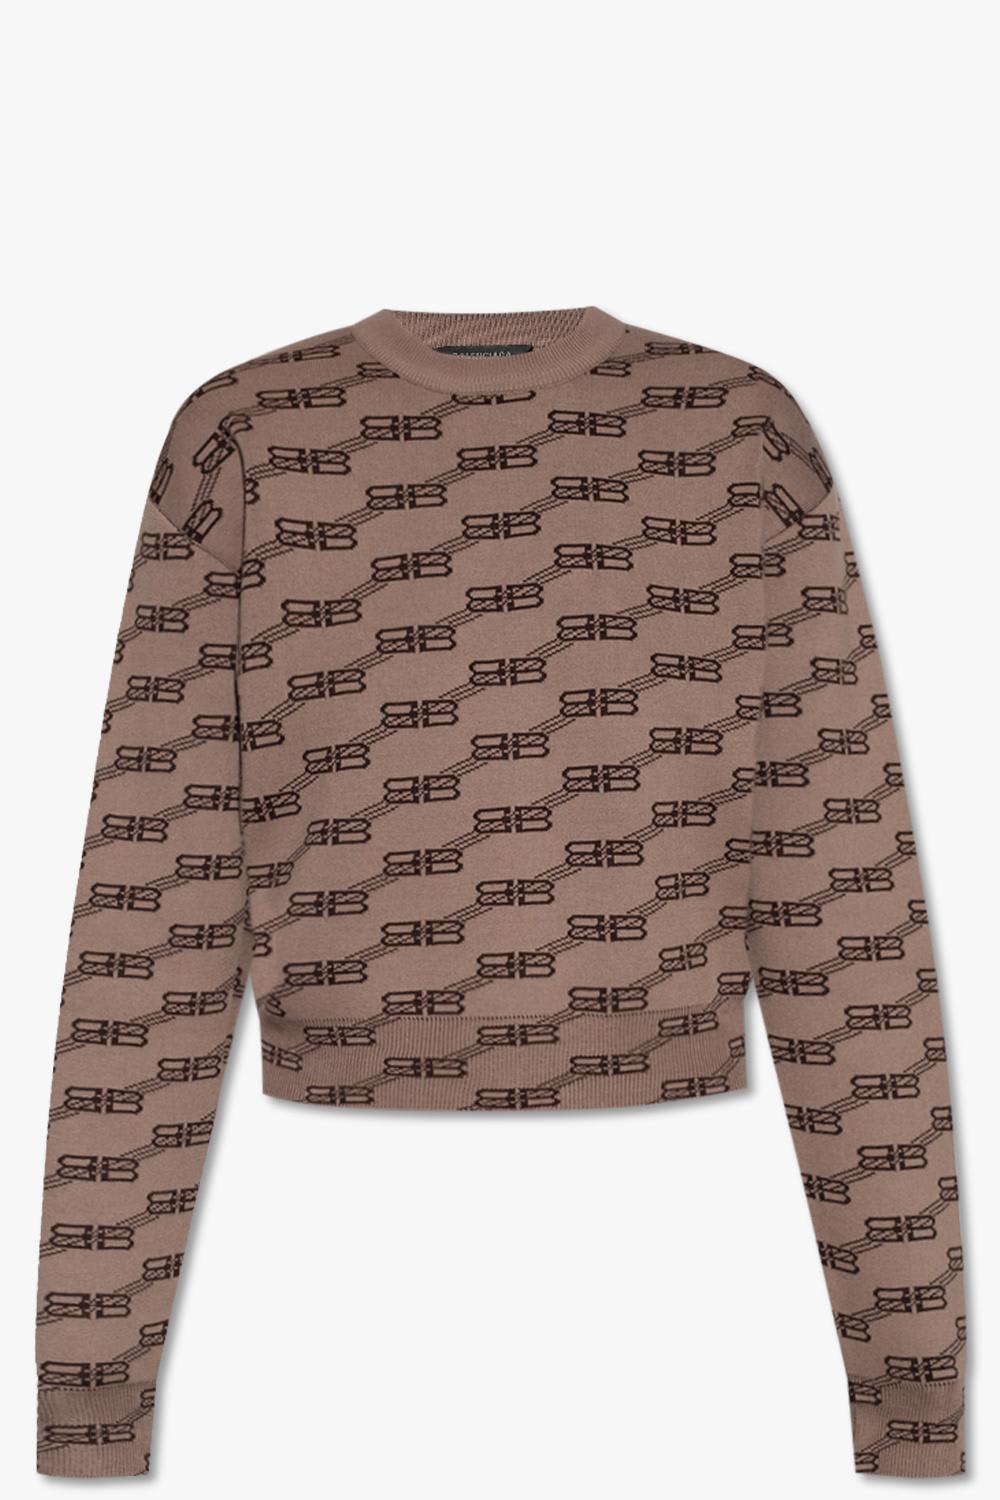 Balenciaga Sweater With Monogram